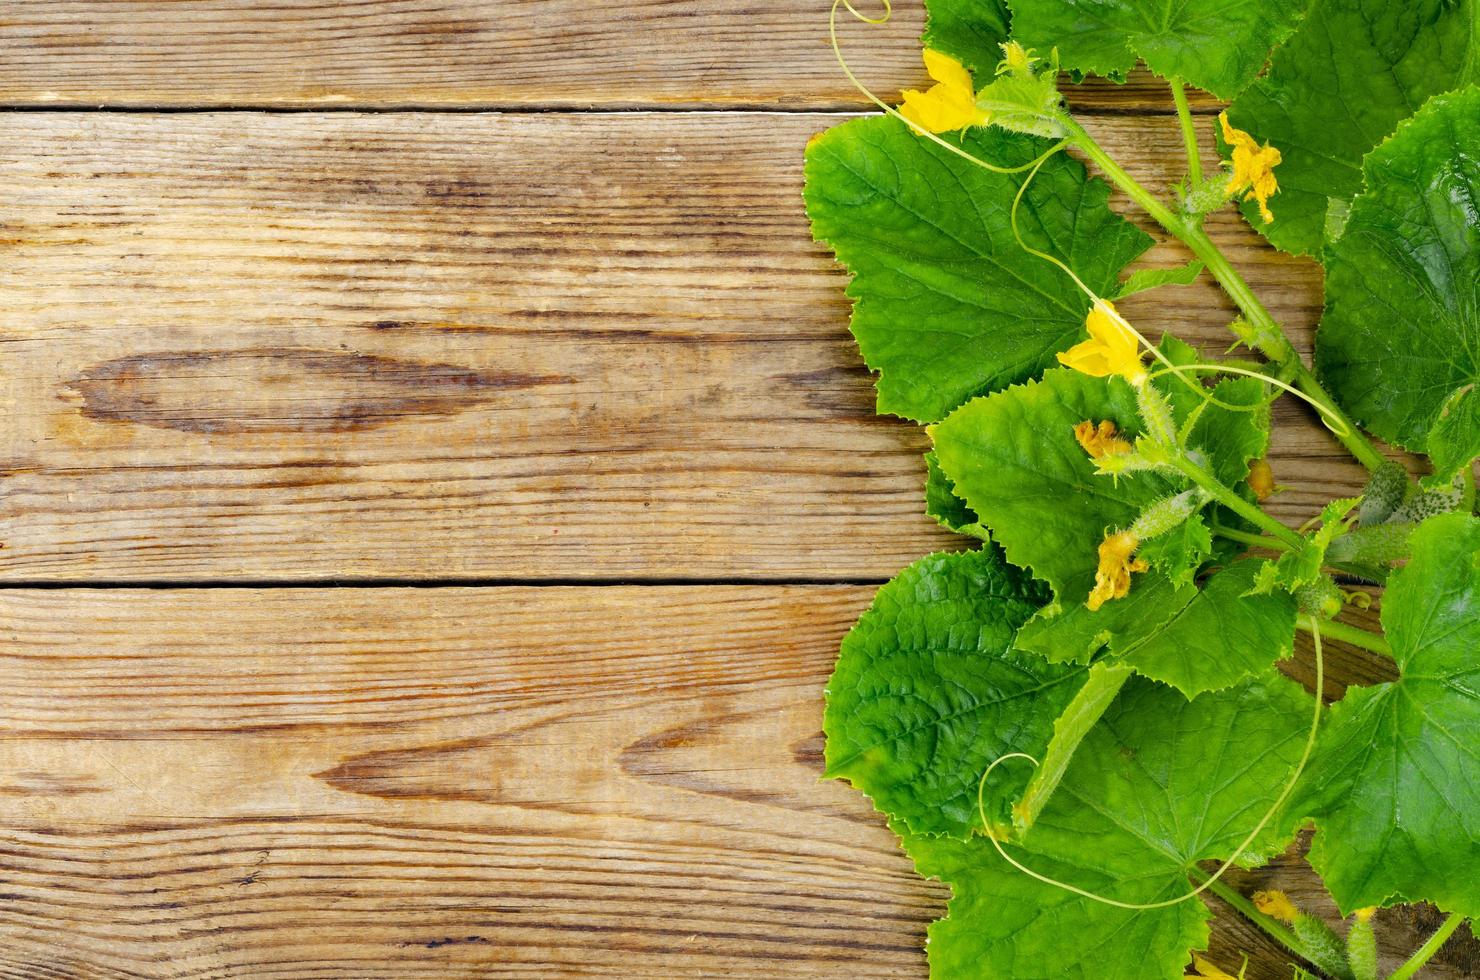 stengels met groene bladeren en kleine komkommers op houten achtergrond. foto